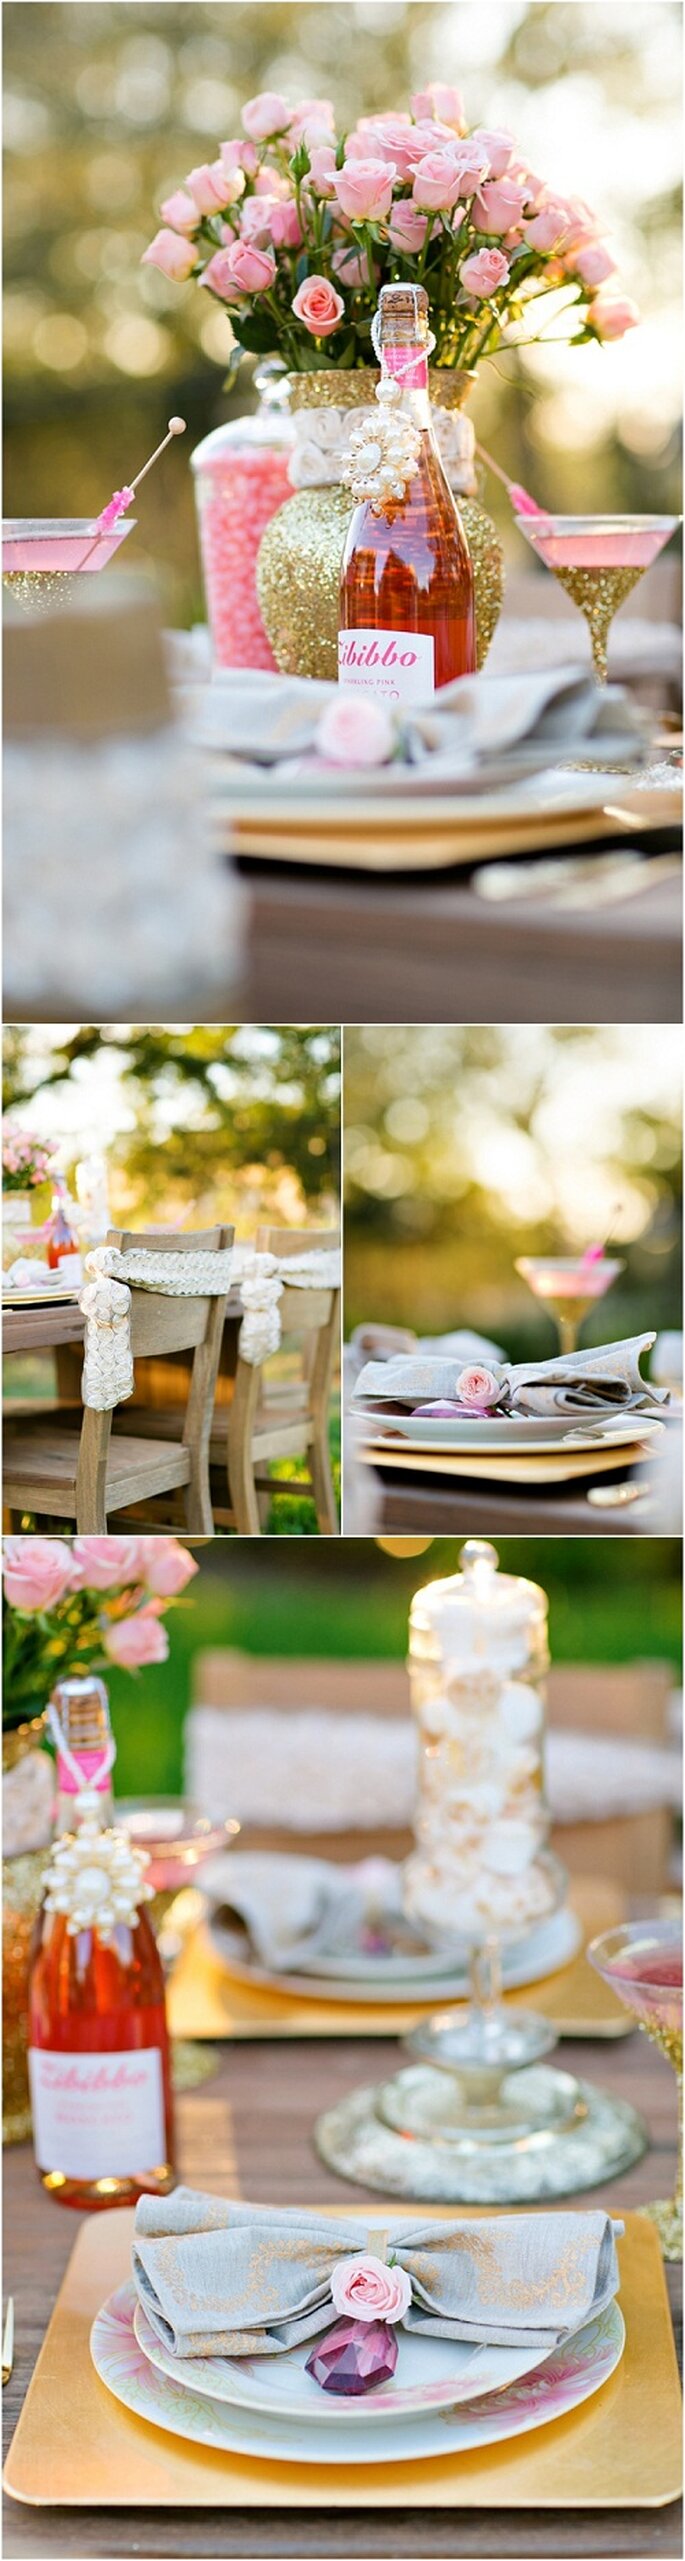 Copas de martini y centros de mesa con detalles dorados - Foto Set Free Photography